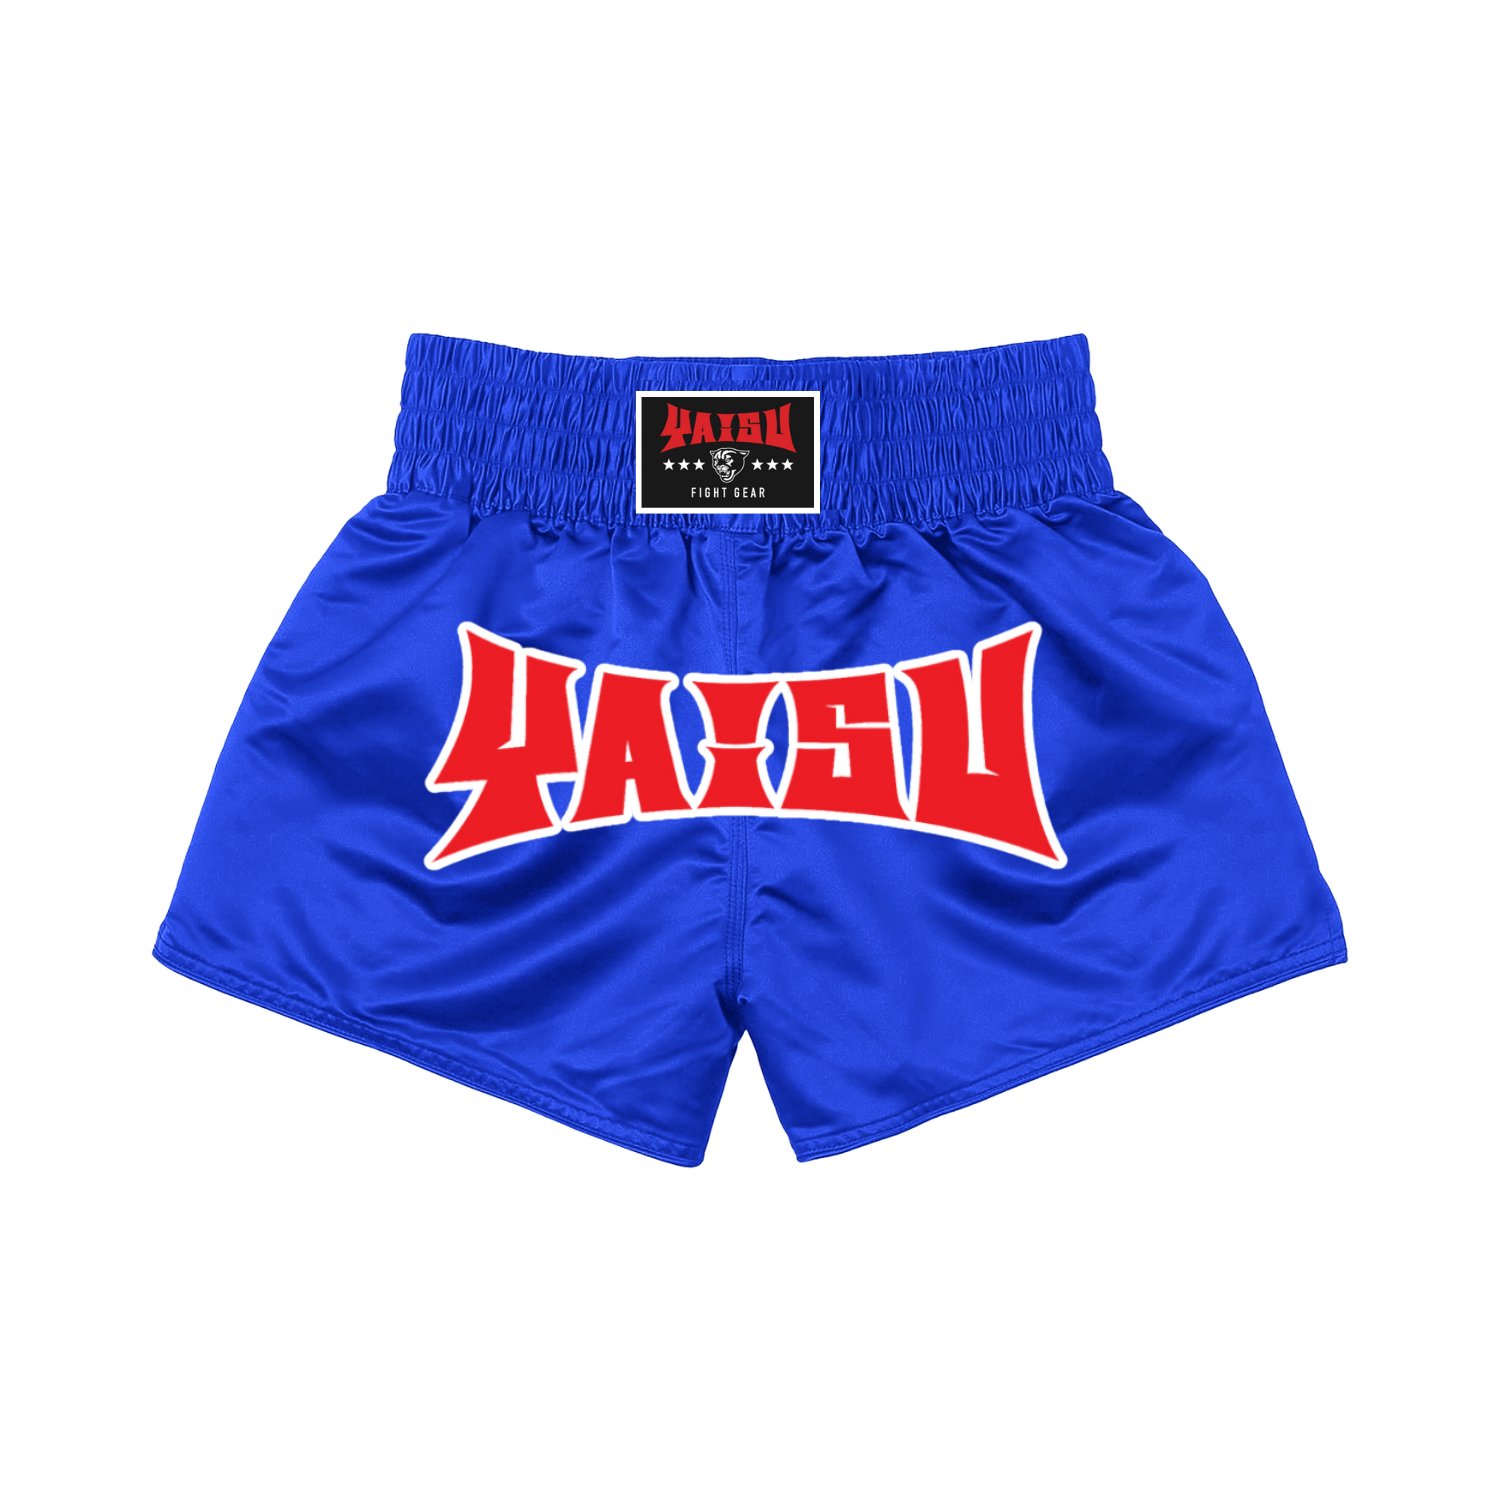 Yaisu Muay Thai Shorts - The Classic